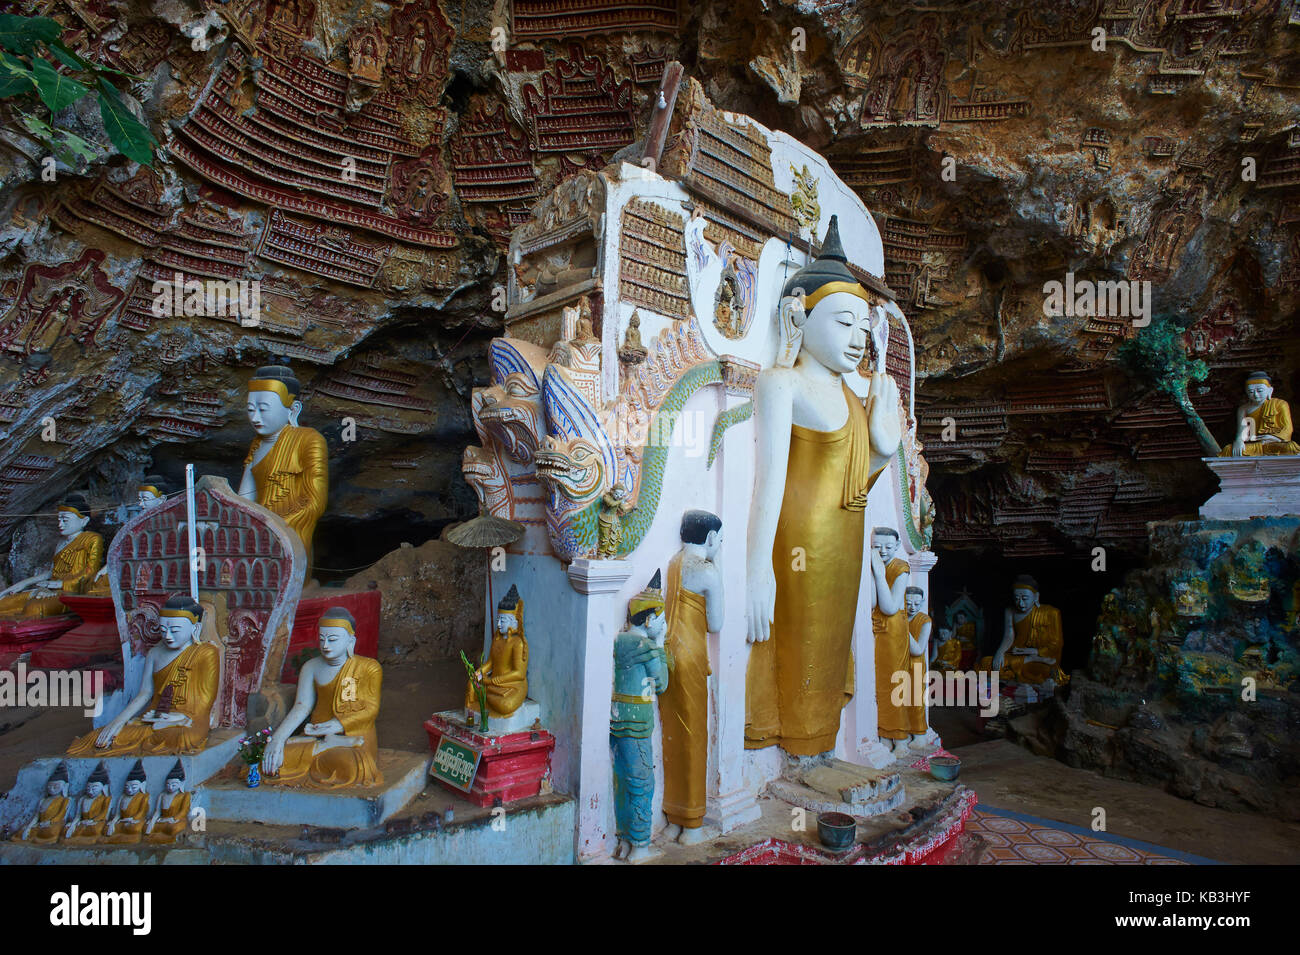 Buddha statues, Hpa-an, Kawgun, Myanmar, Asia, Stock Photo